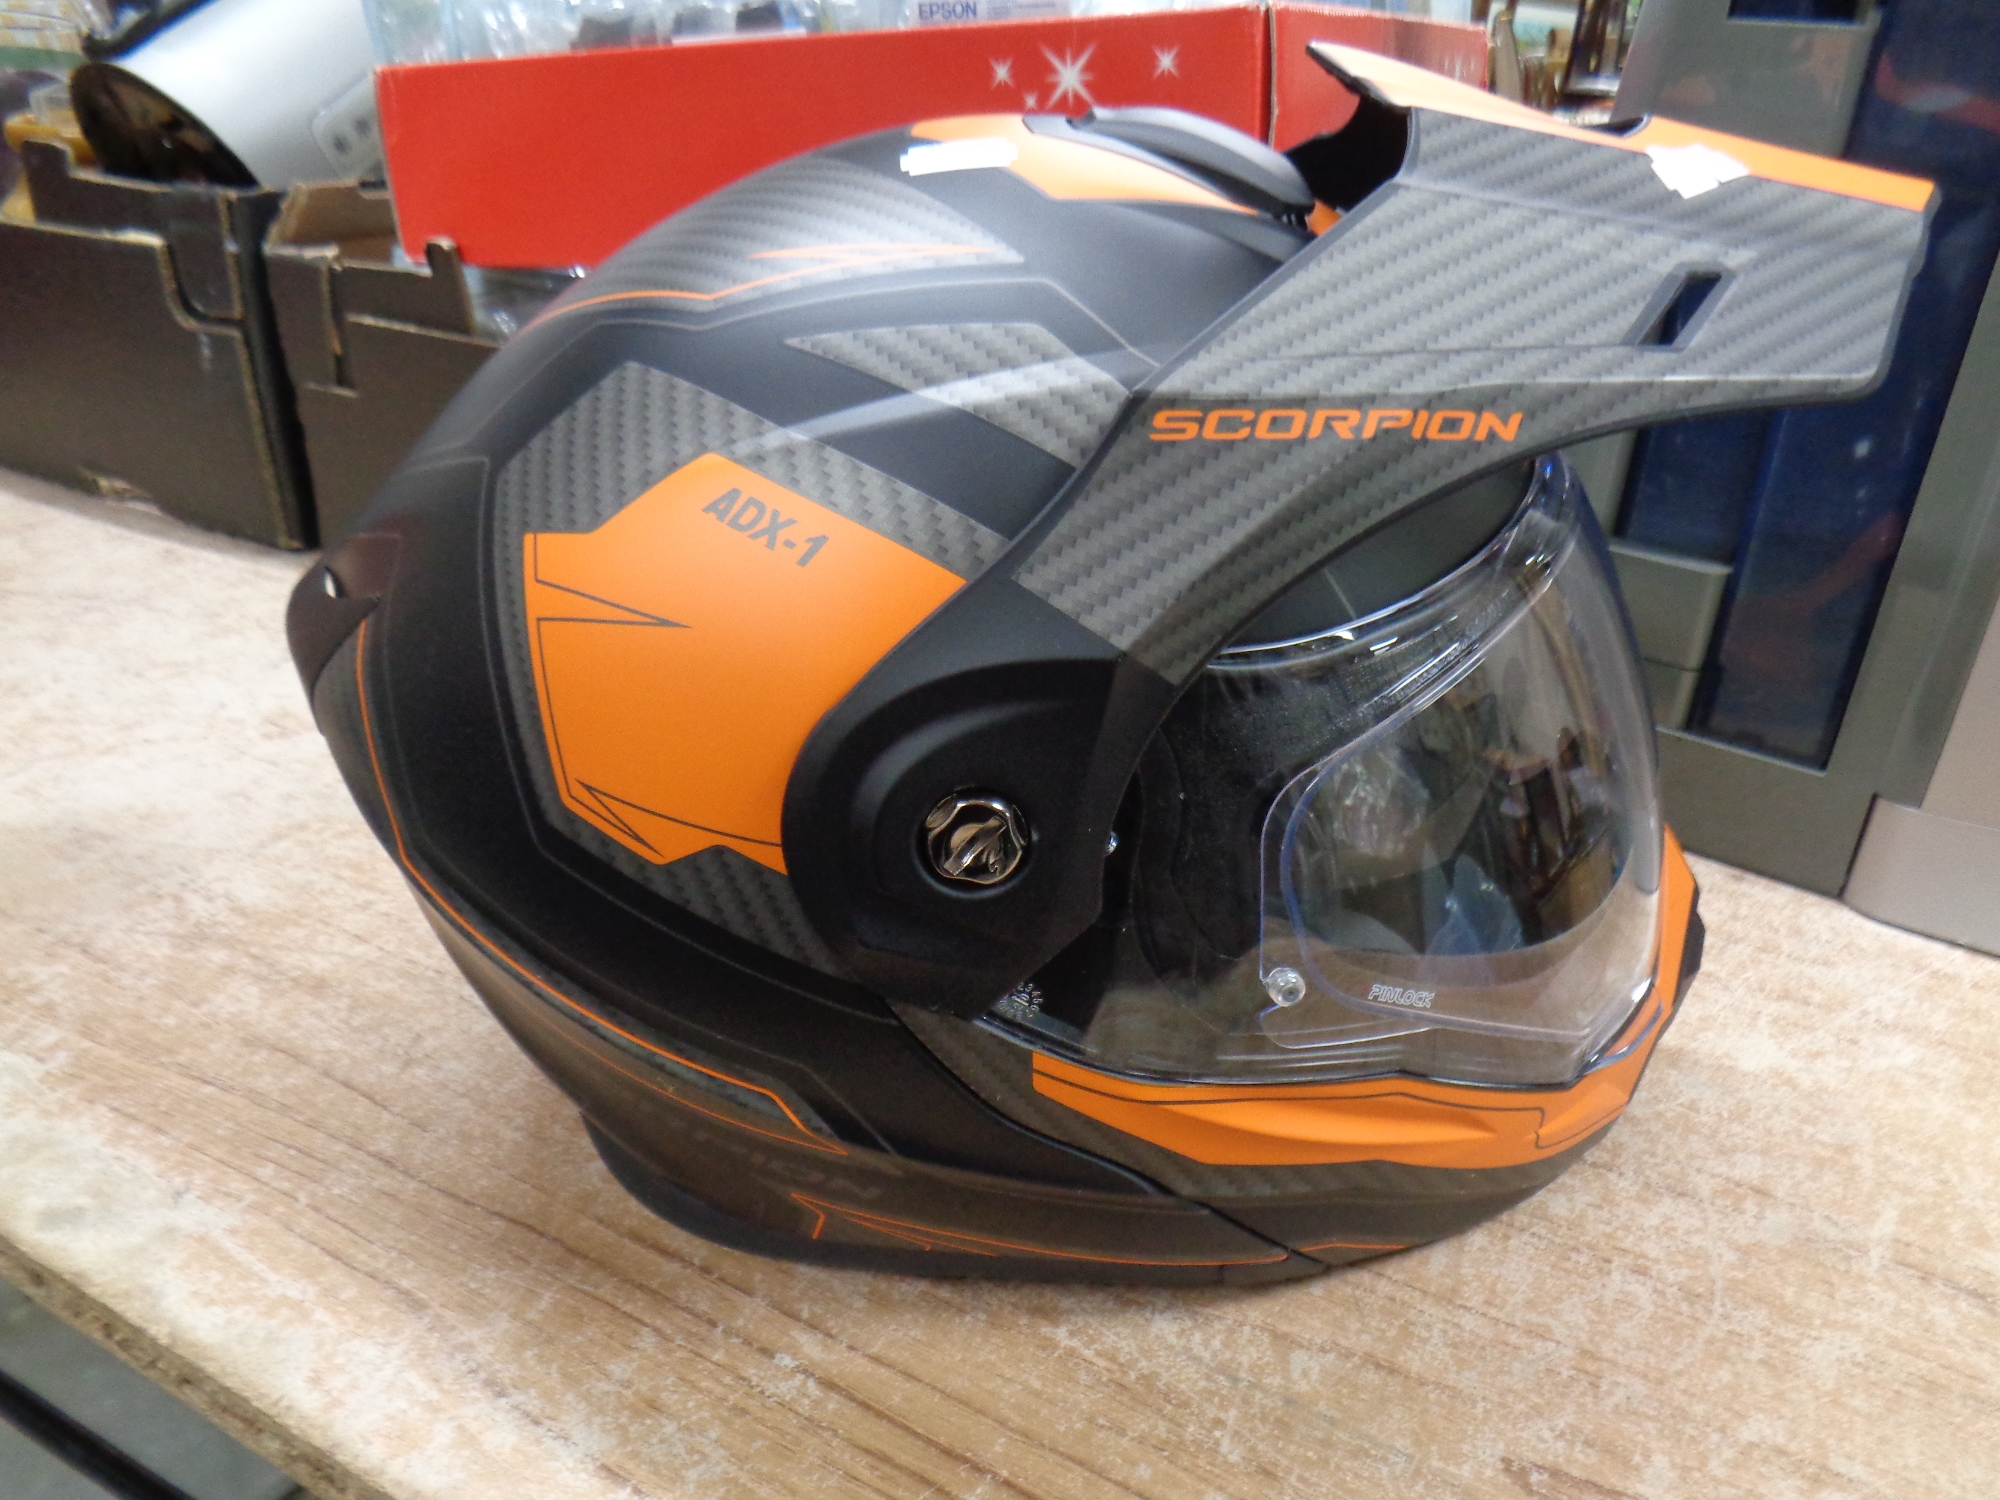 A Scorpion ADX-1 motorcycle helmet